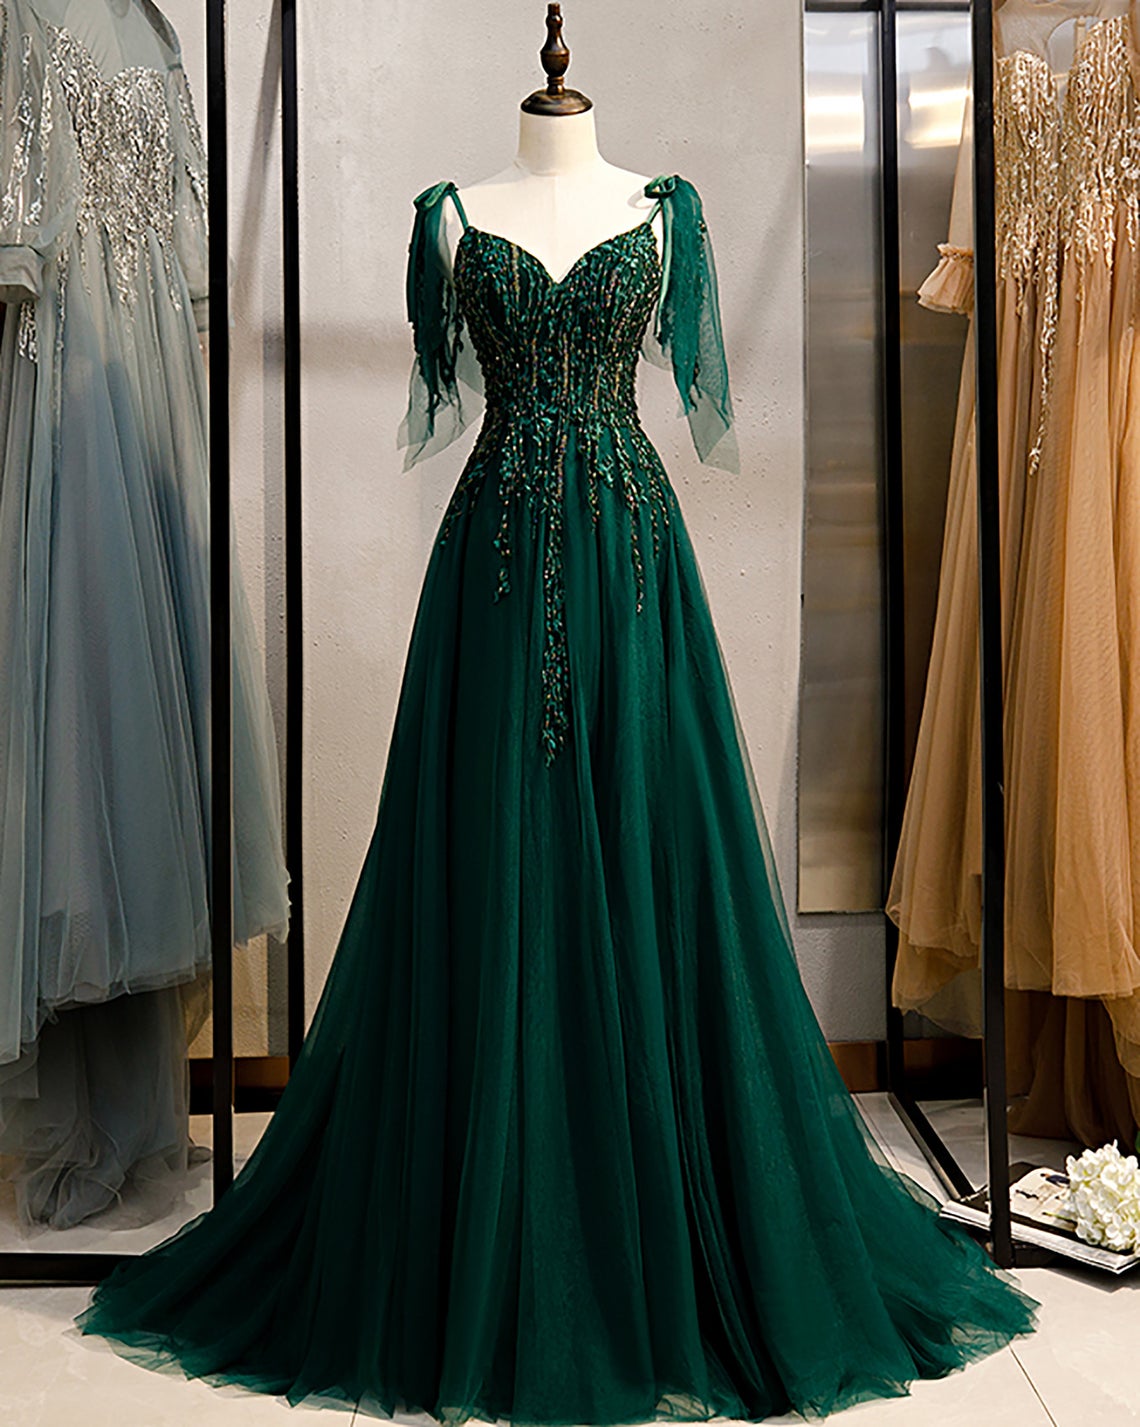 Emerald Palace Puff Gown | Teuta Matoshi